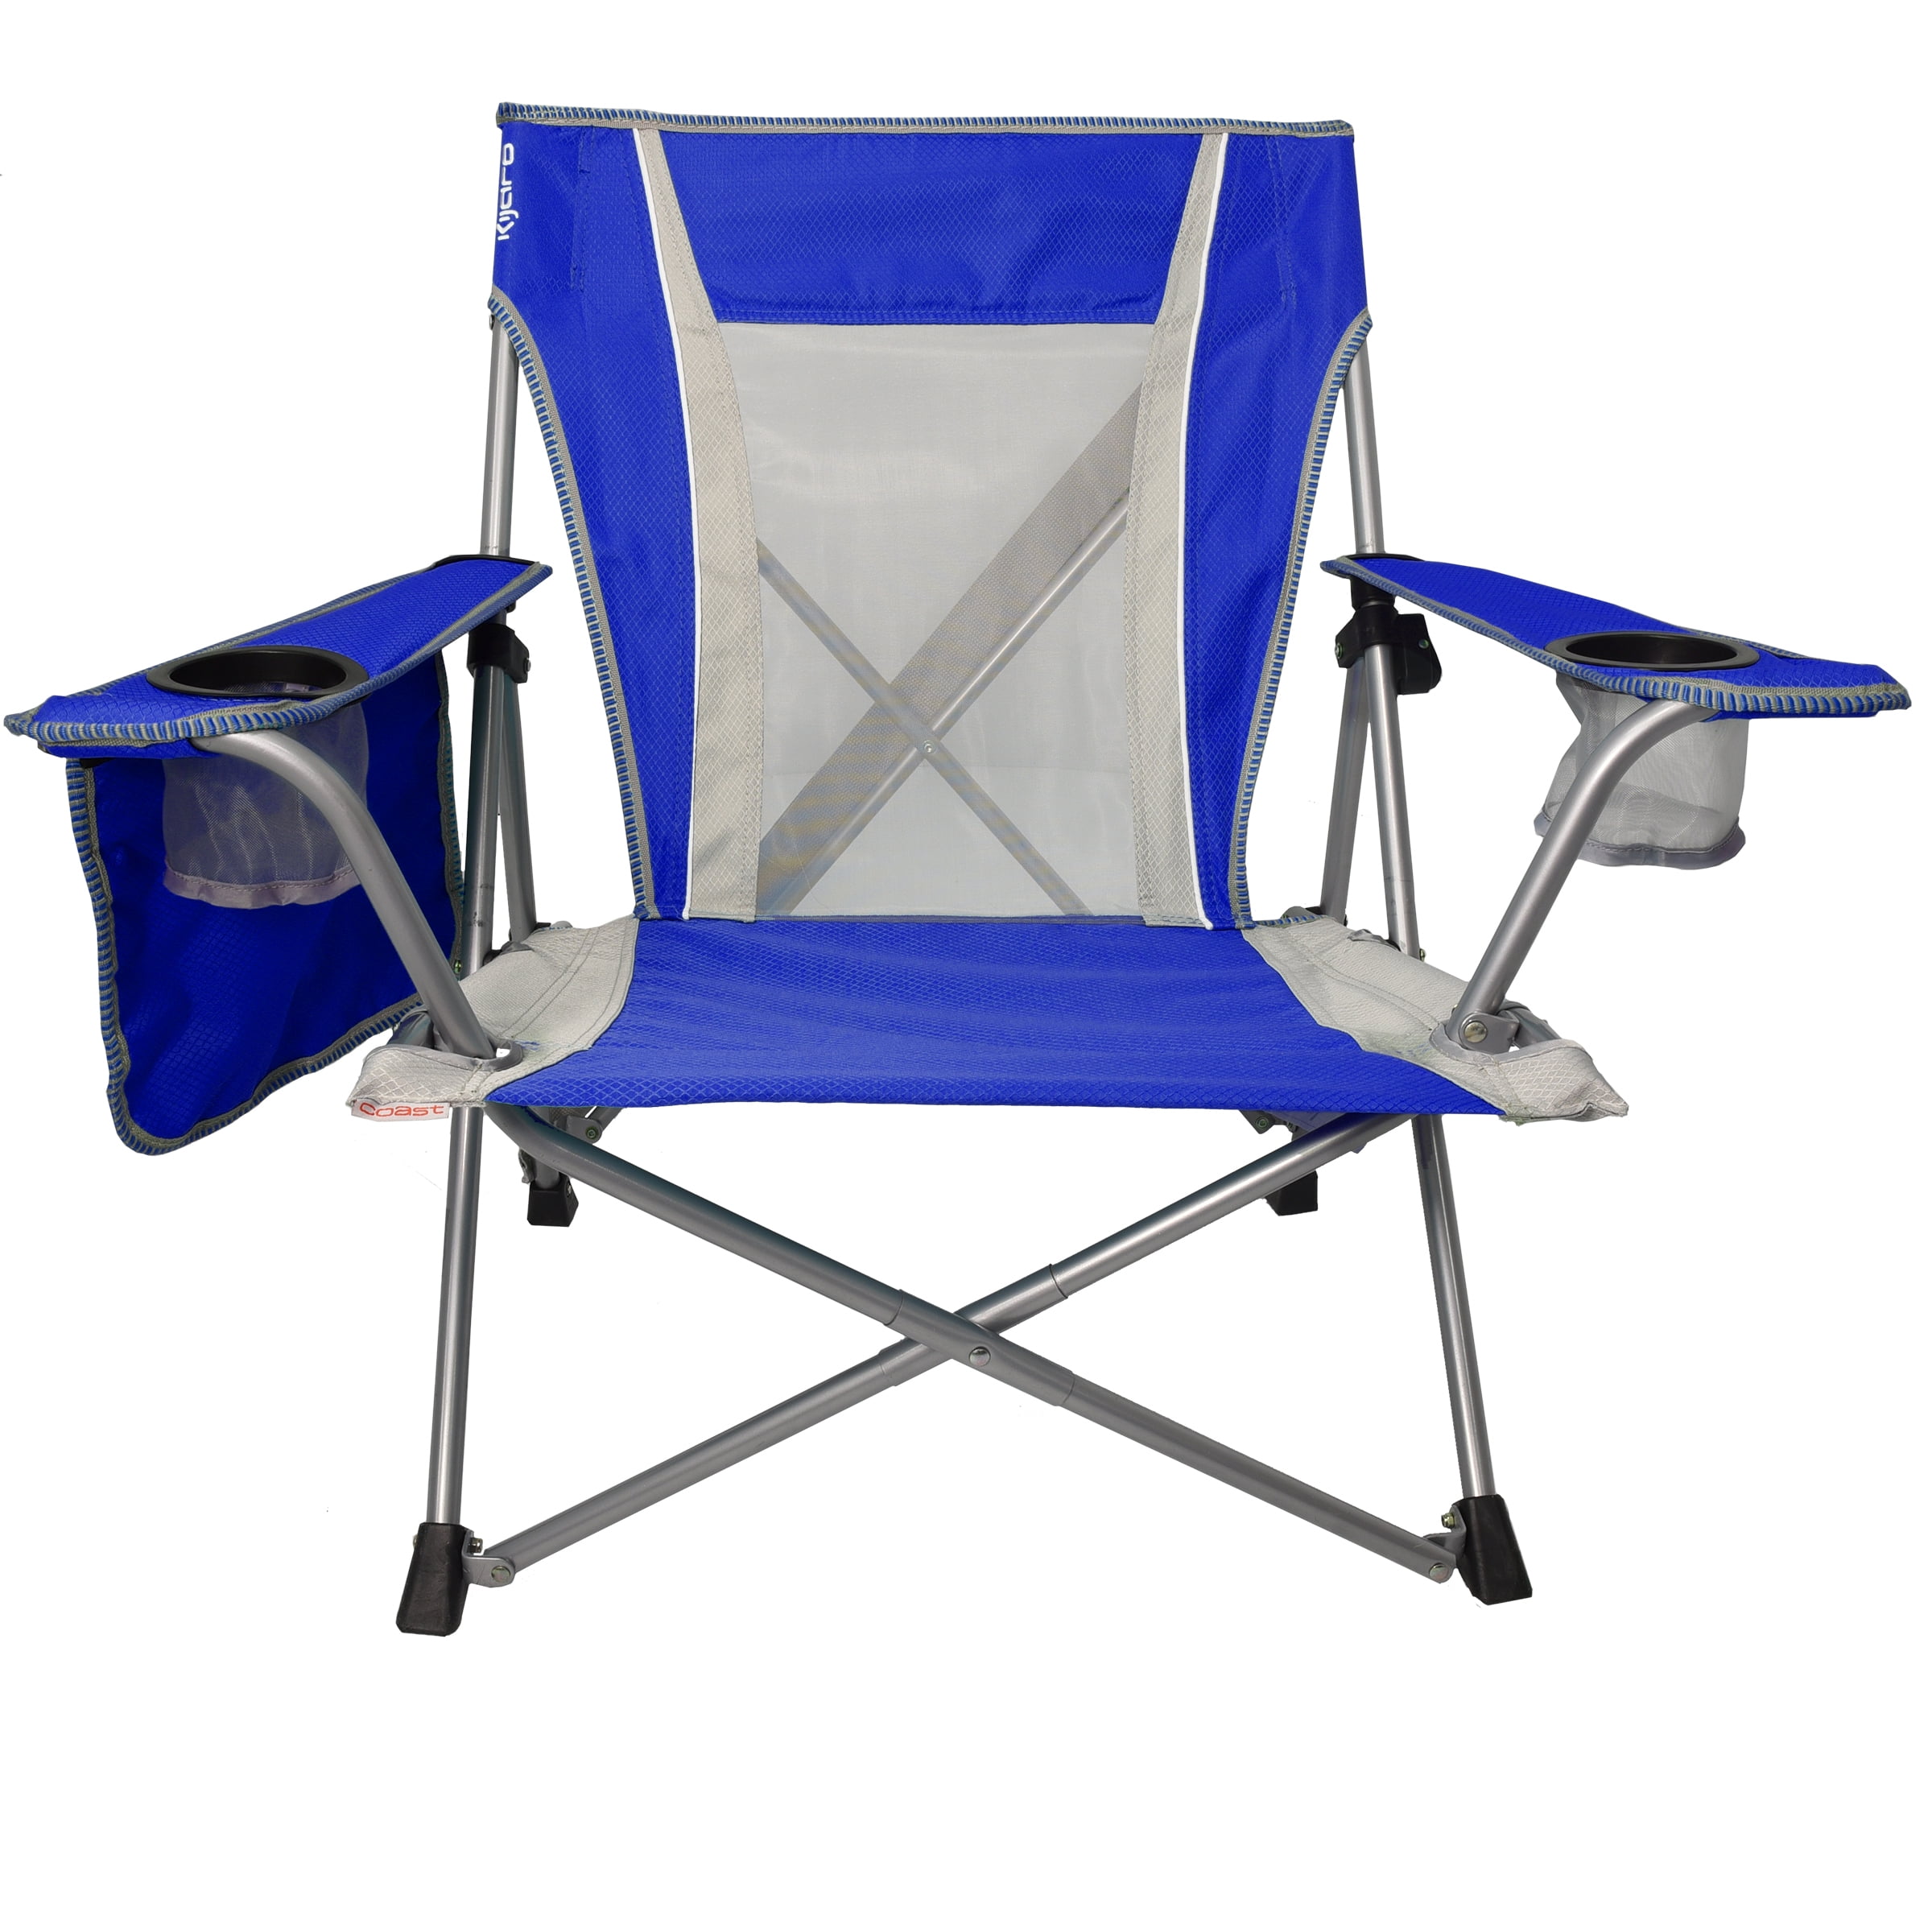 Kijaro Coast Dual Lock Portable Beach Wave Chair Ionian Turquoise 54076